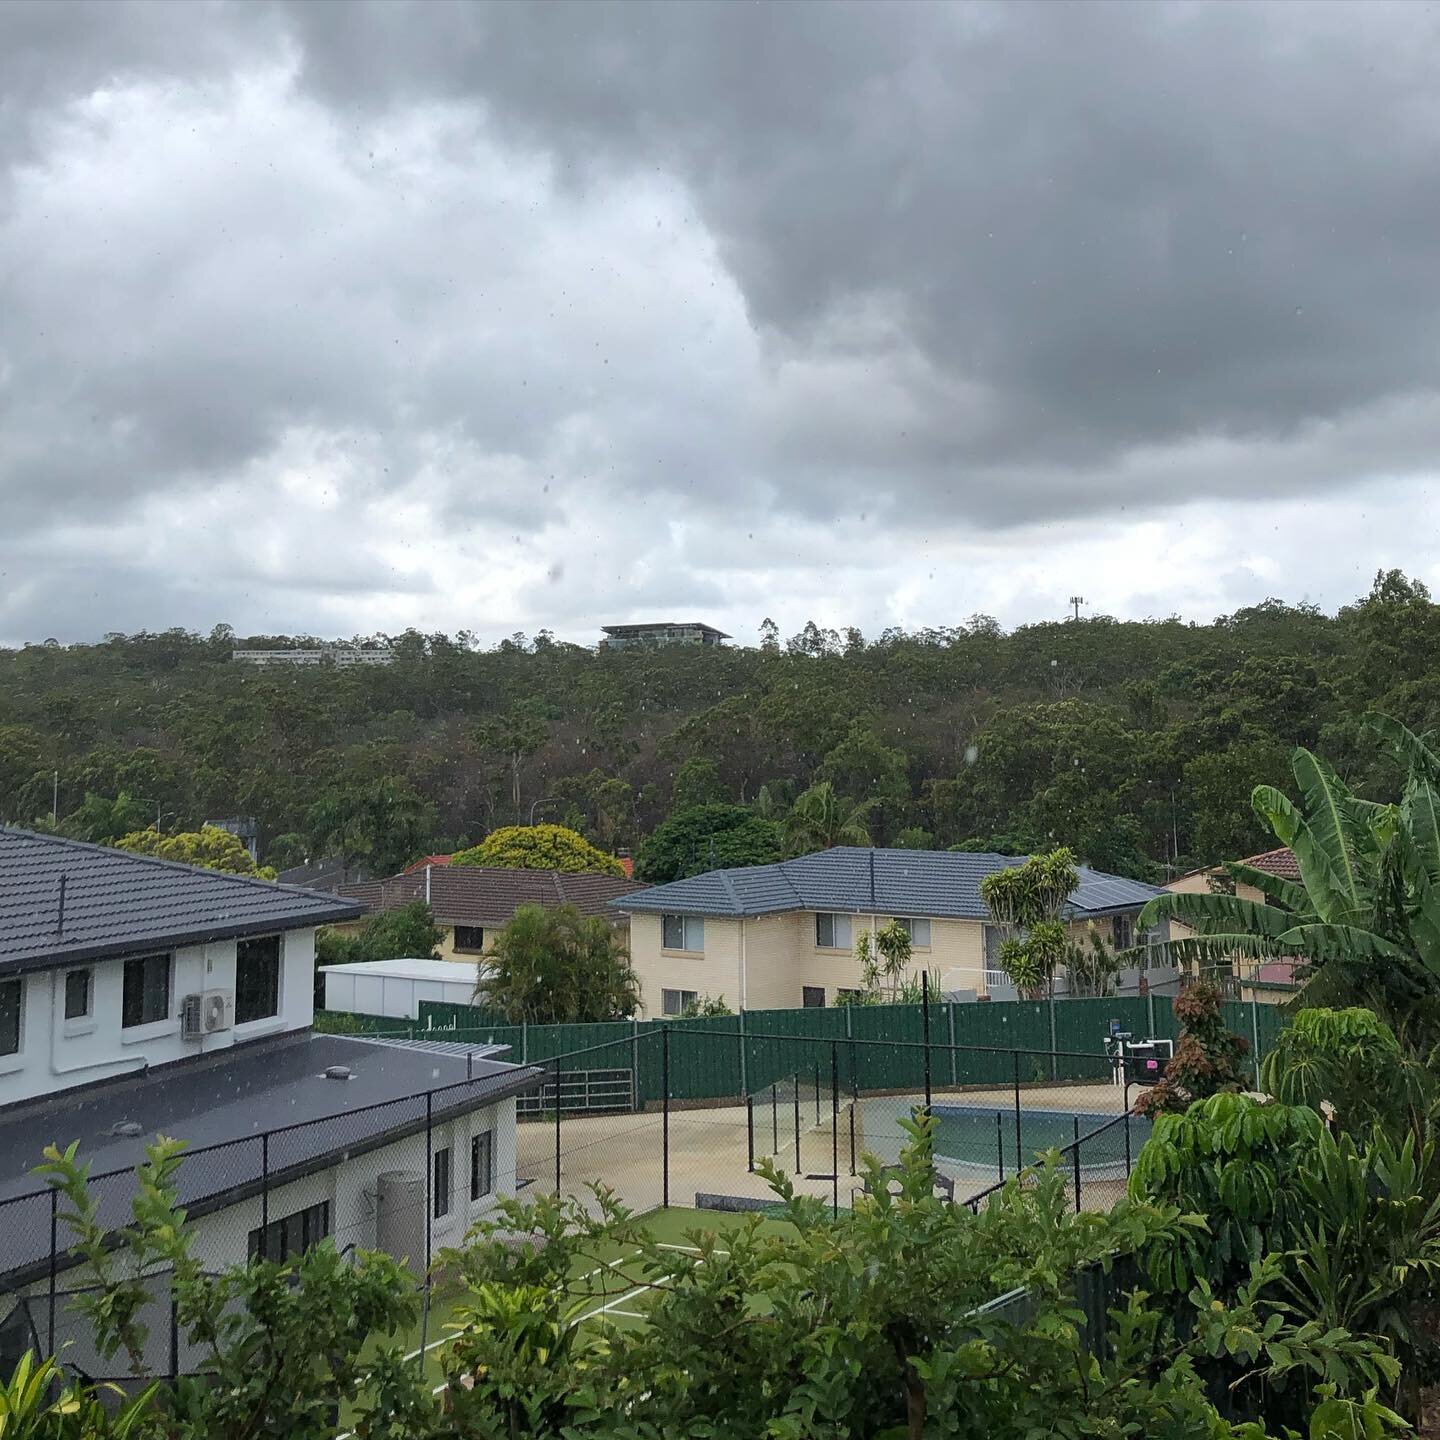 Just beautiful rain clouds ☁️ ☁️ here in #Brisbane! View to #griffithuniversity #studentaccommodation #studybrisbane